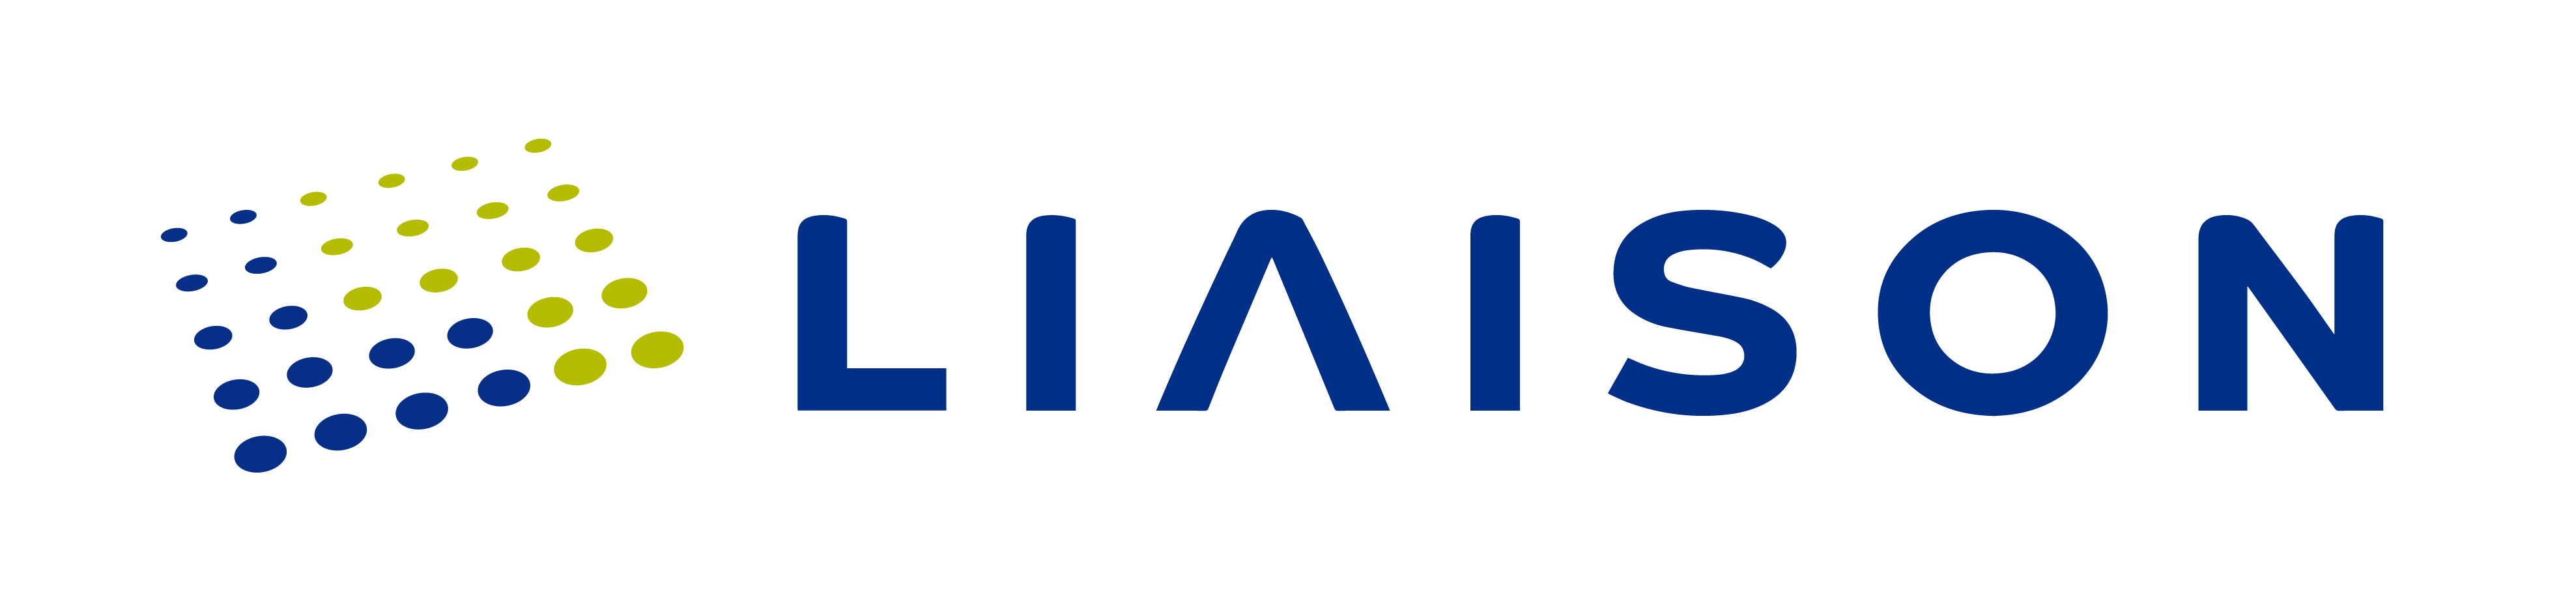 Liaison International logo